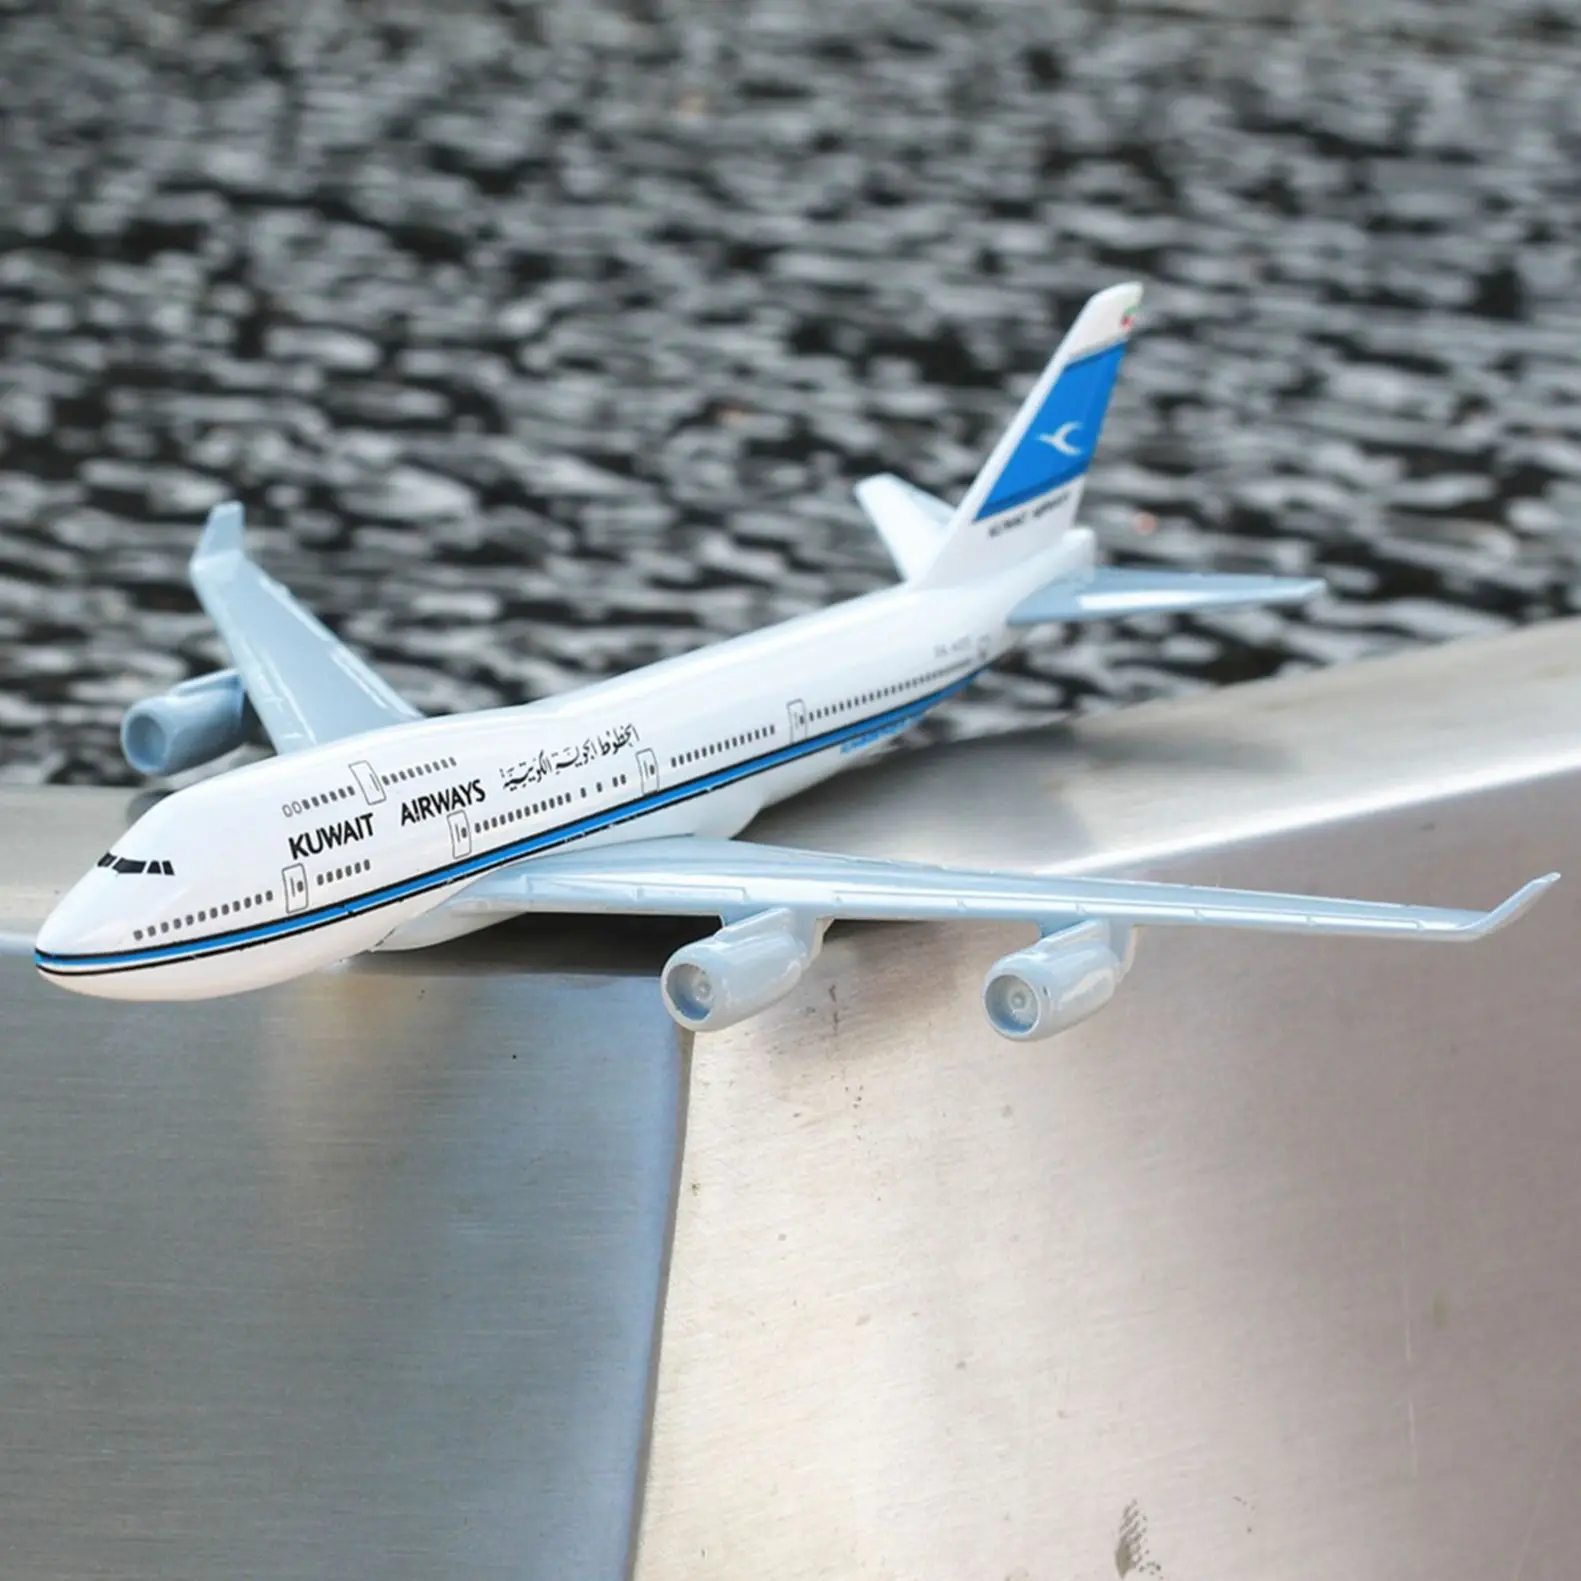 Scale 1:400 Kuwait Airways Aircraft Model 15cm Alloy Aviation Collectible Plane Diecast Miniature Ornament Souvenir Airplane Toy